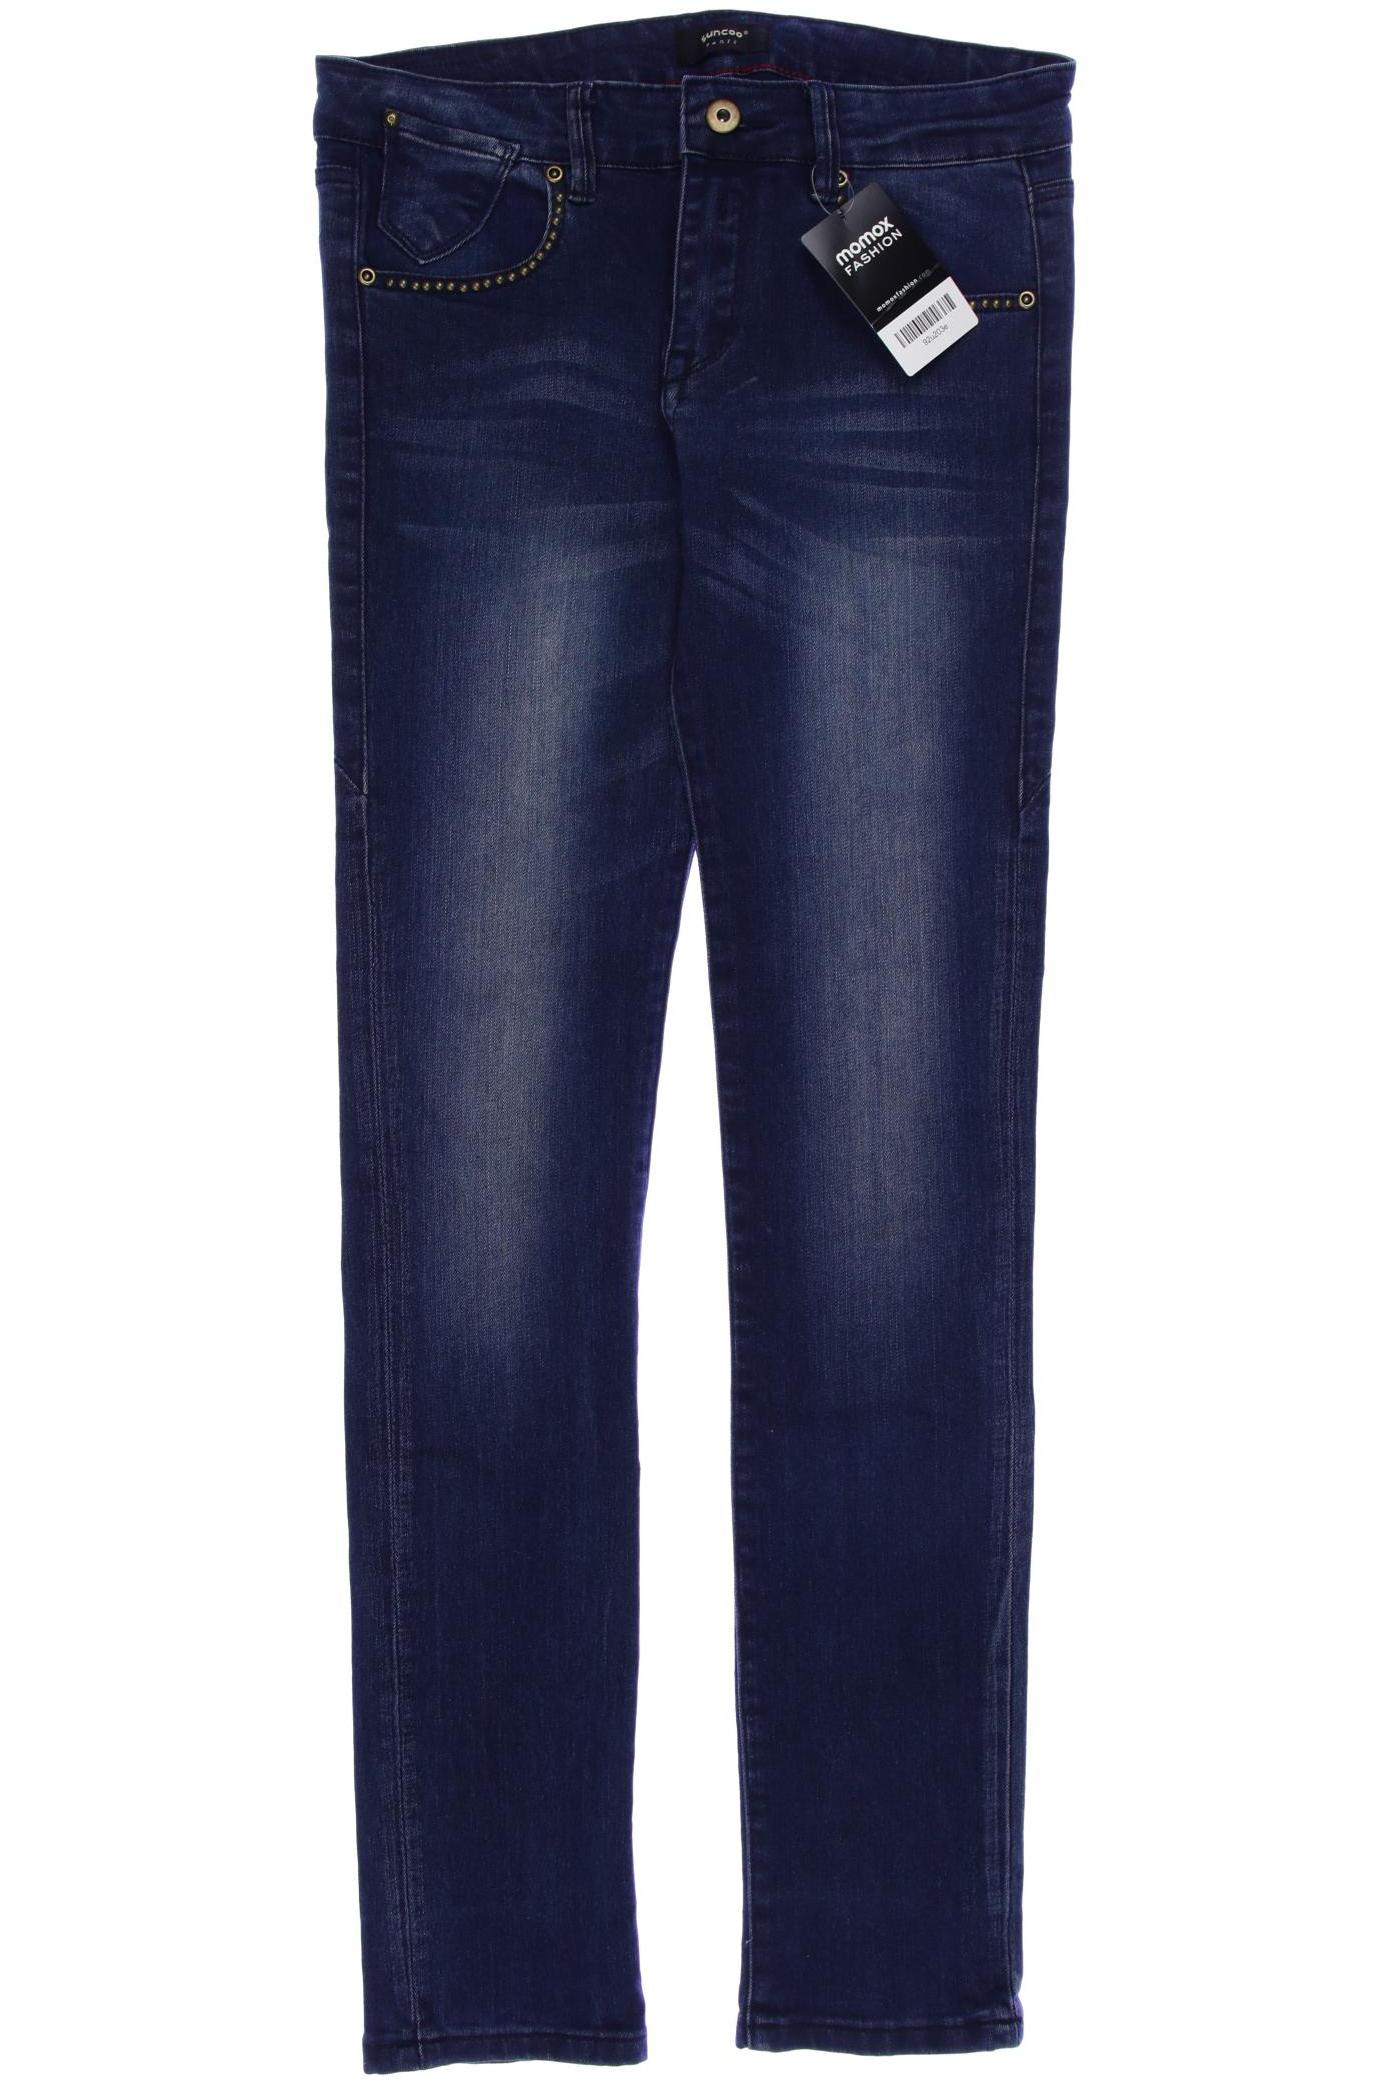 SUNCOO Damen Jeans, marineblau von Suncoo